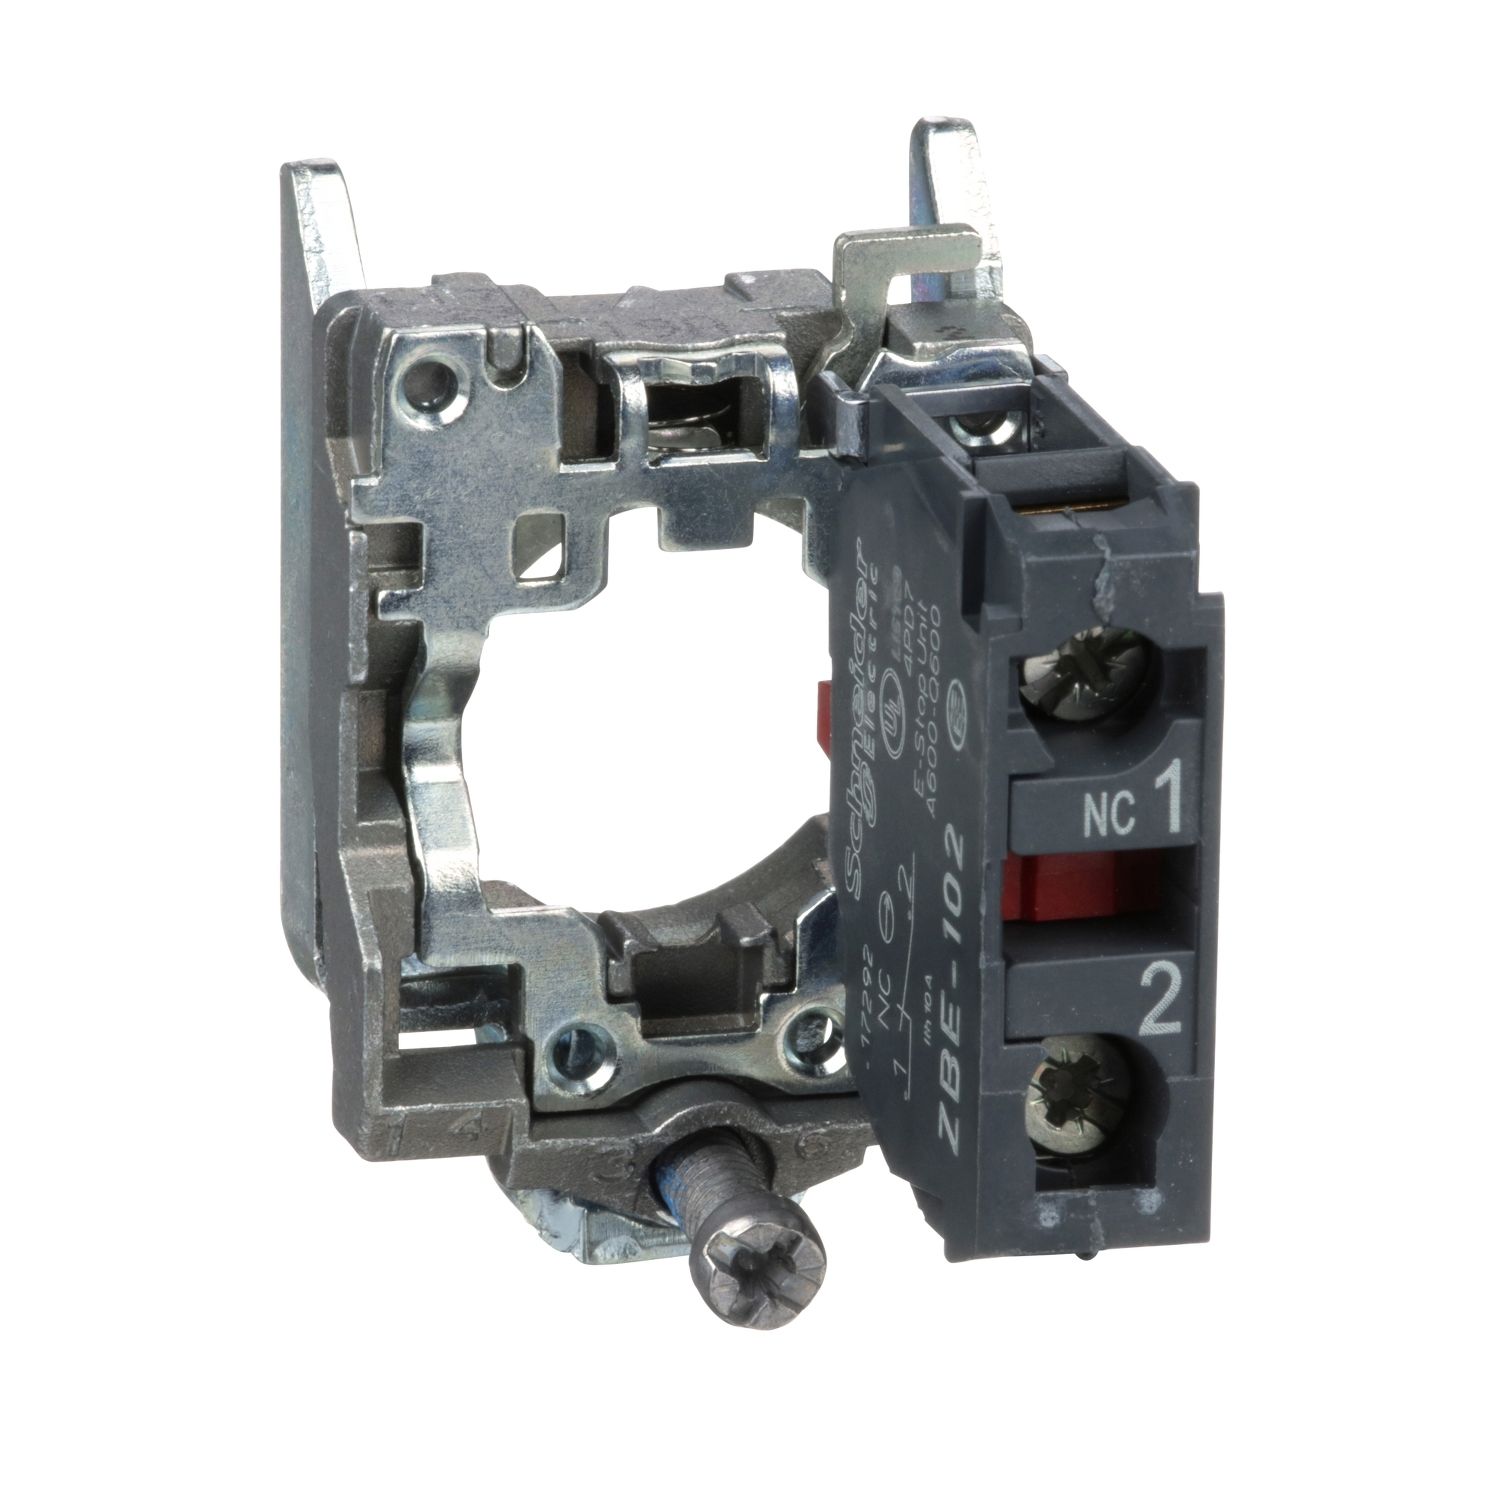 ZB4BZ102 Single contact block with body fixing collar, Harmony XB4, metal, screw clamp terminal, 1NC